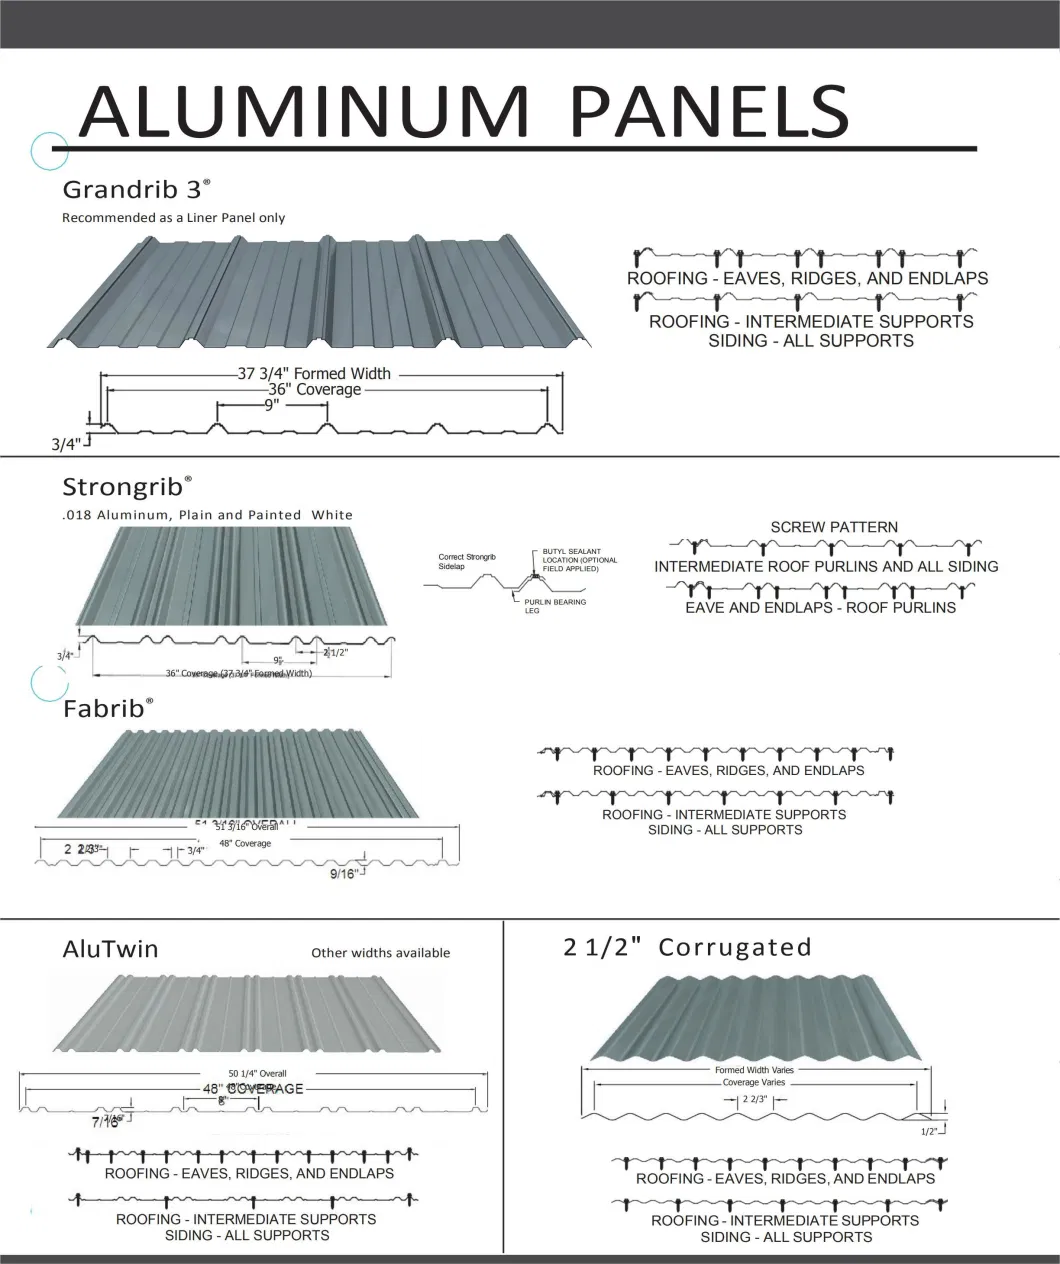 PPGI/PPGL/Dx51d/Dx52D/Dx53D Az150 Galvanized/Prepainted/Gi/Color Coated Steel Roofing Corrugated Sheet Aluminium Zinc Color Coated Galvanized Roofing Sheet